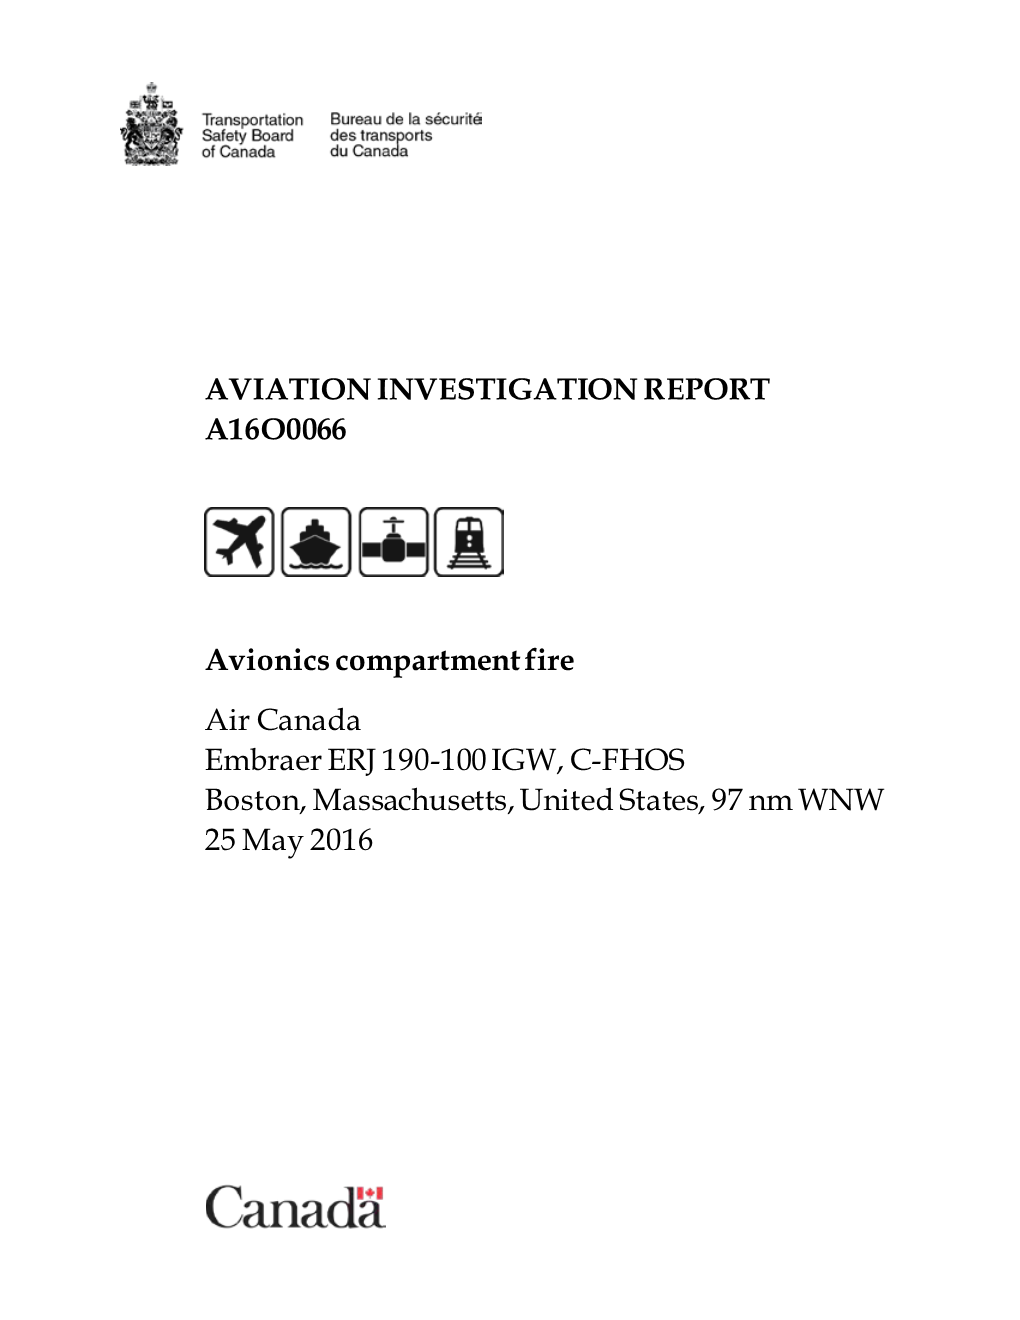 Aviation Investigation Report A16o0066